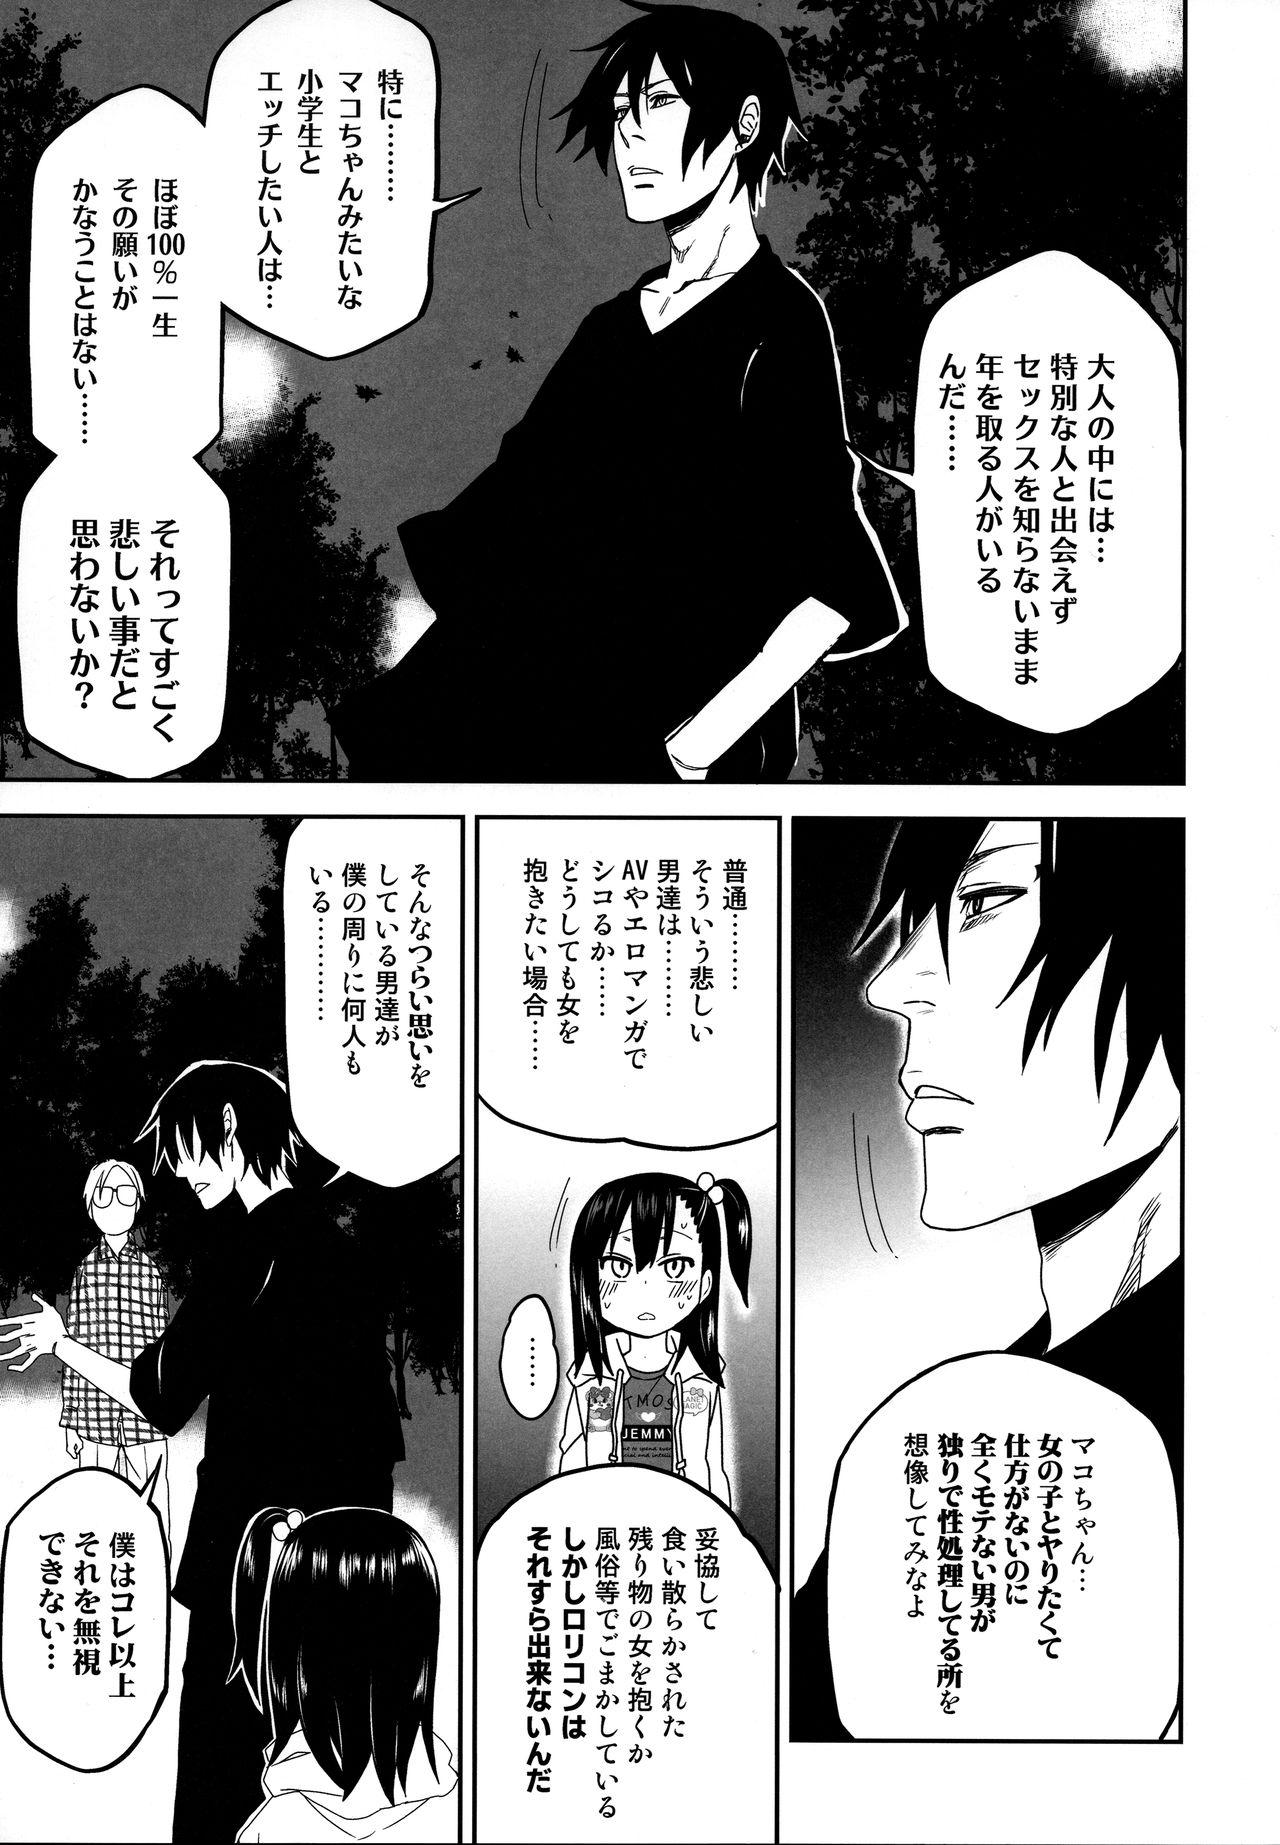 Farting Tonari no Mako-chan Season 2 Vol. 2 - Original Czech - Page 7